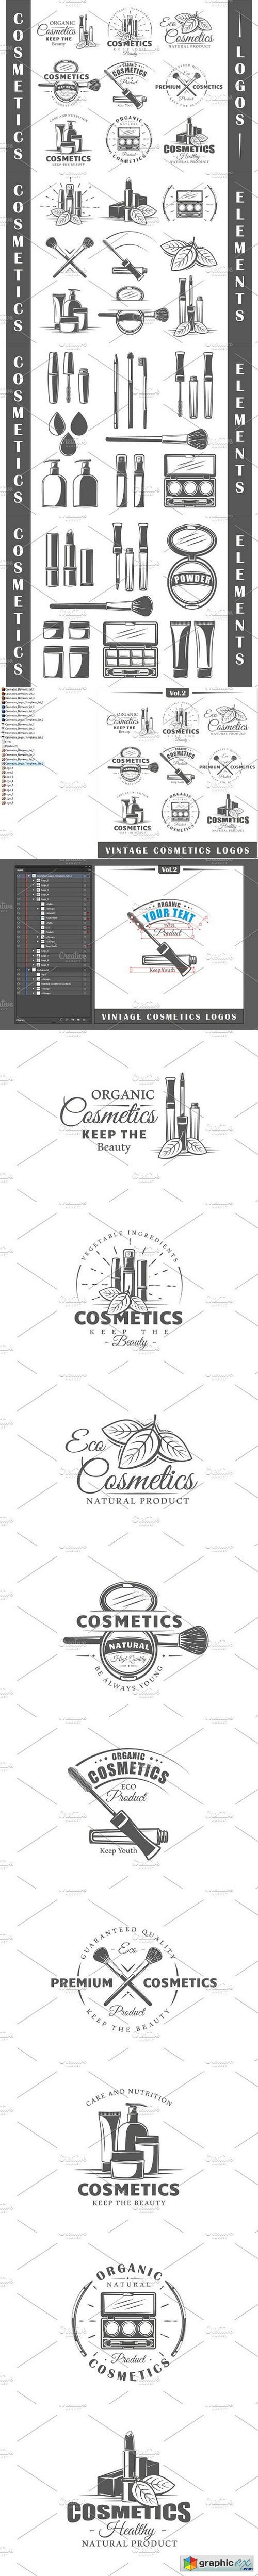 9 Cosmetics Logos Templates Vol.2